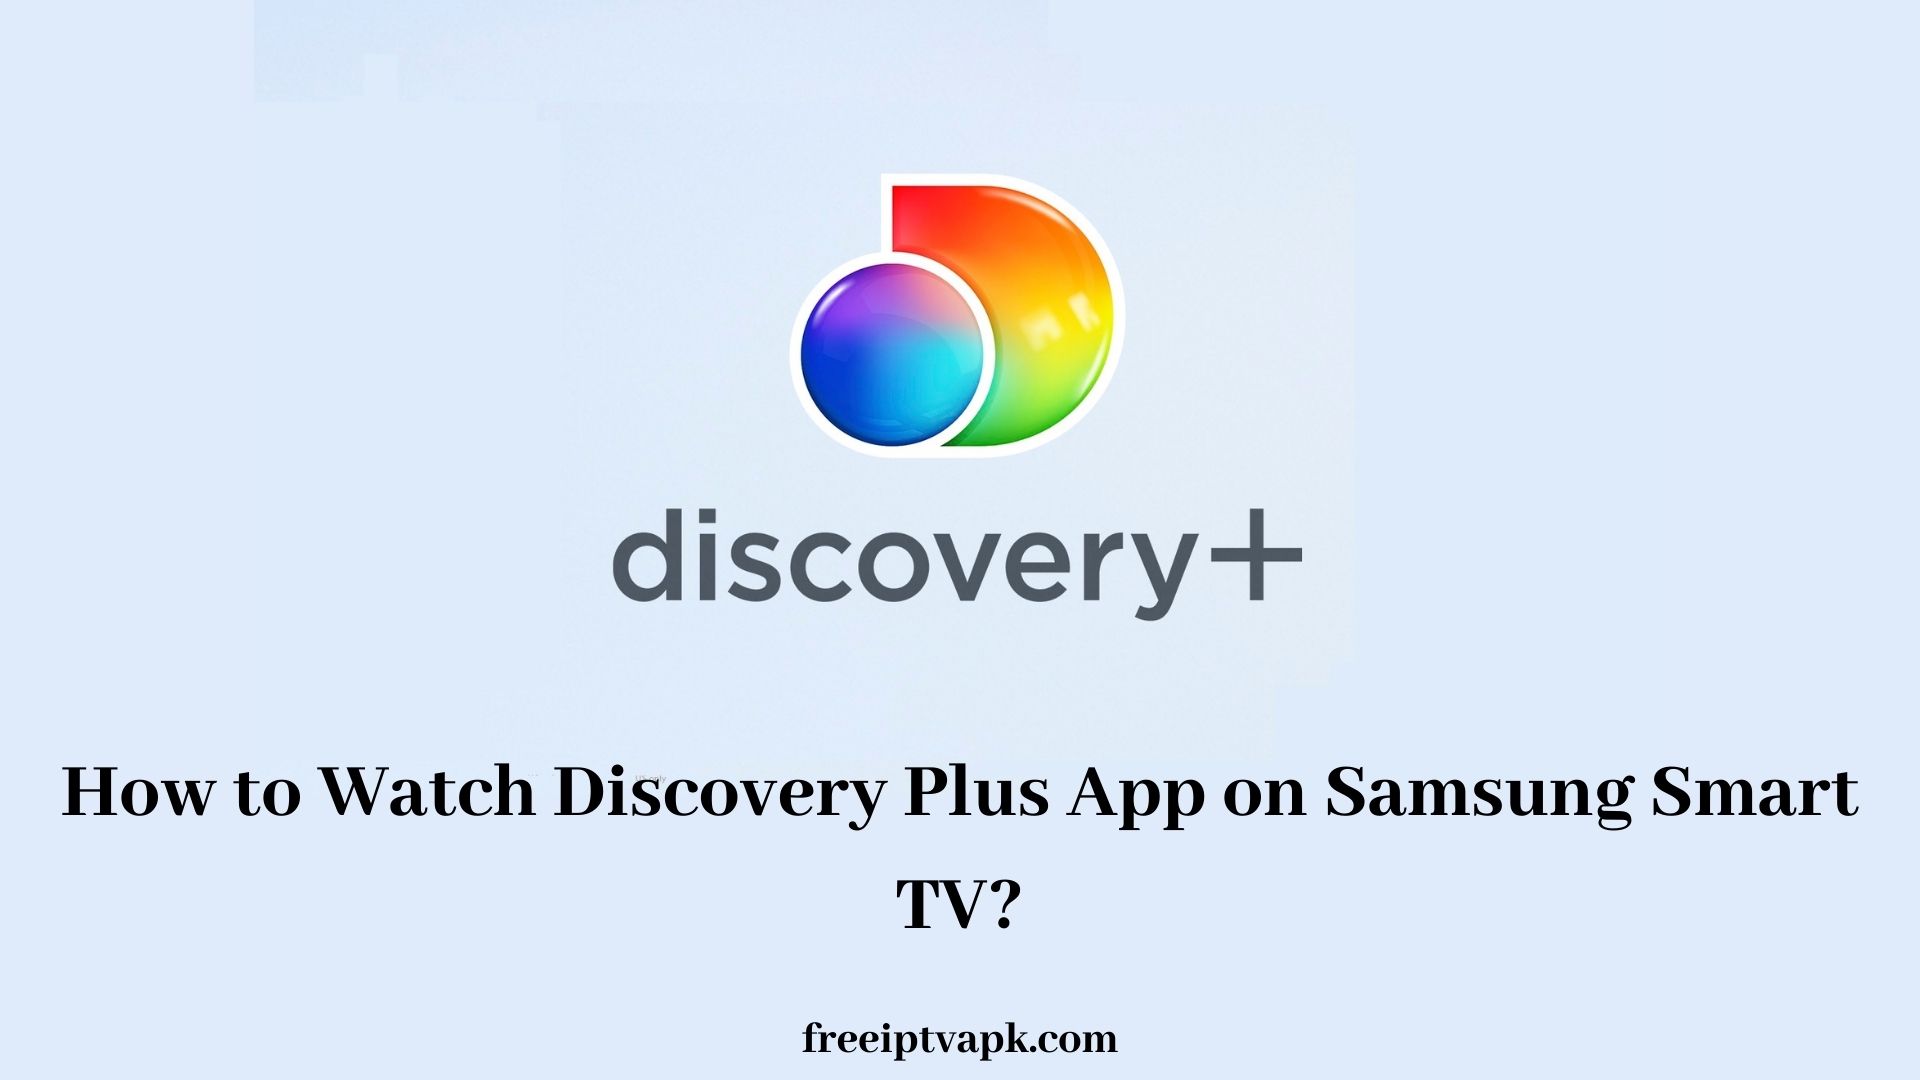 Discovery Plus App on Samsung Smart TV